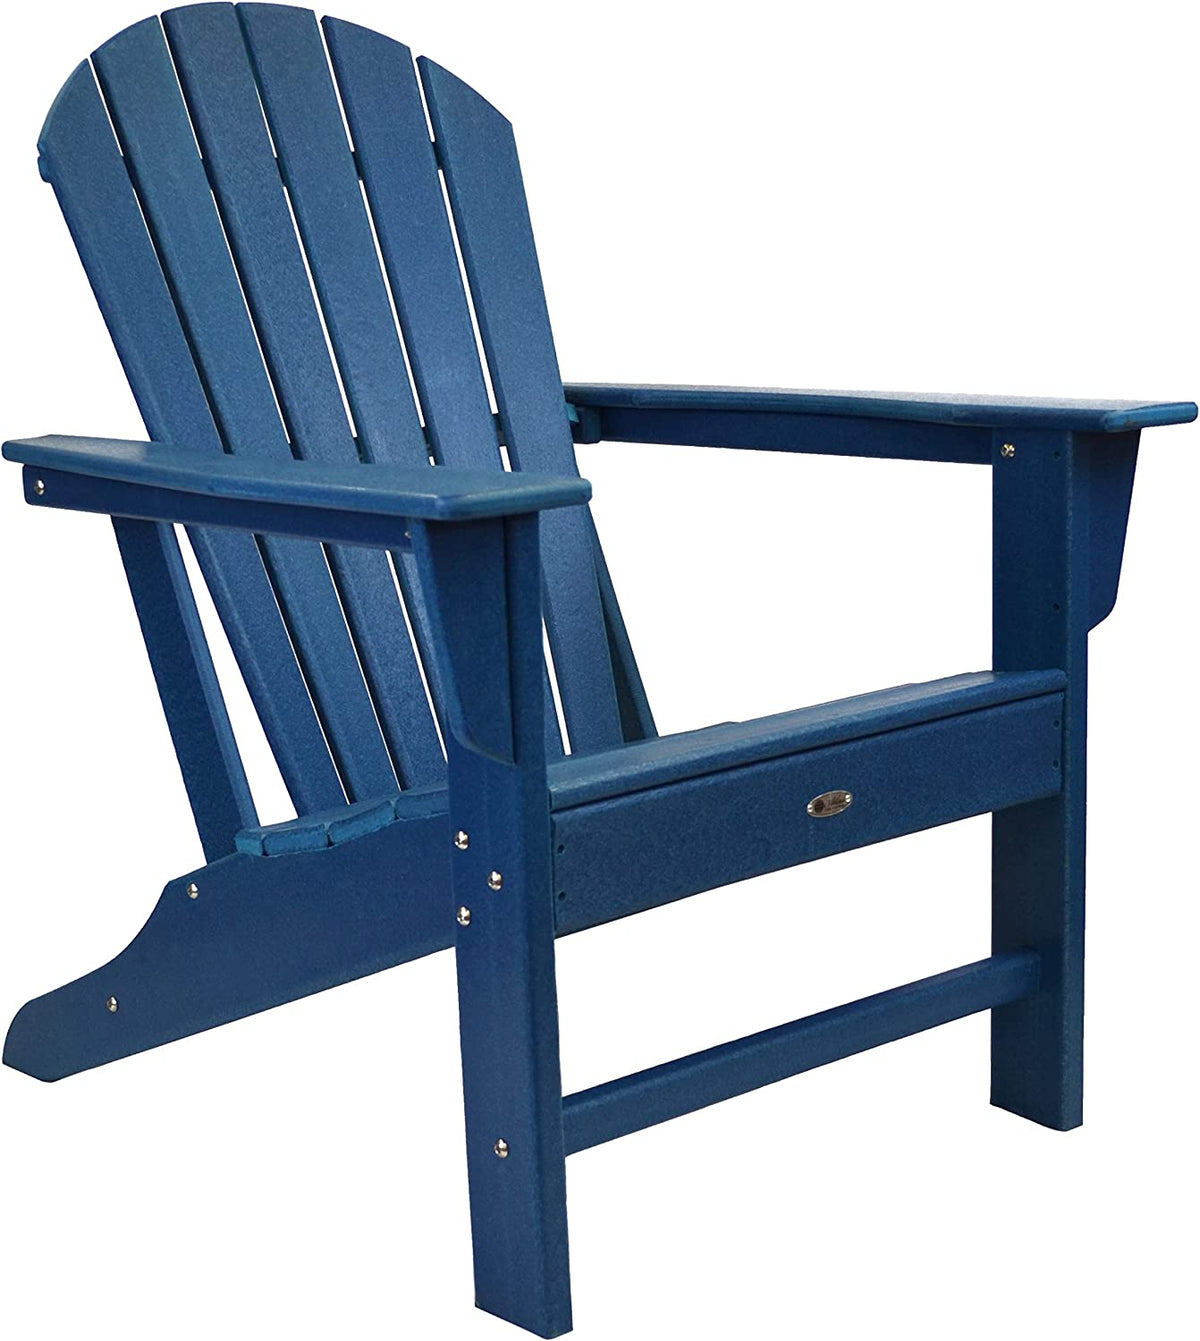 Adirondack Chair by Atlas, Surf City - Navy